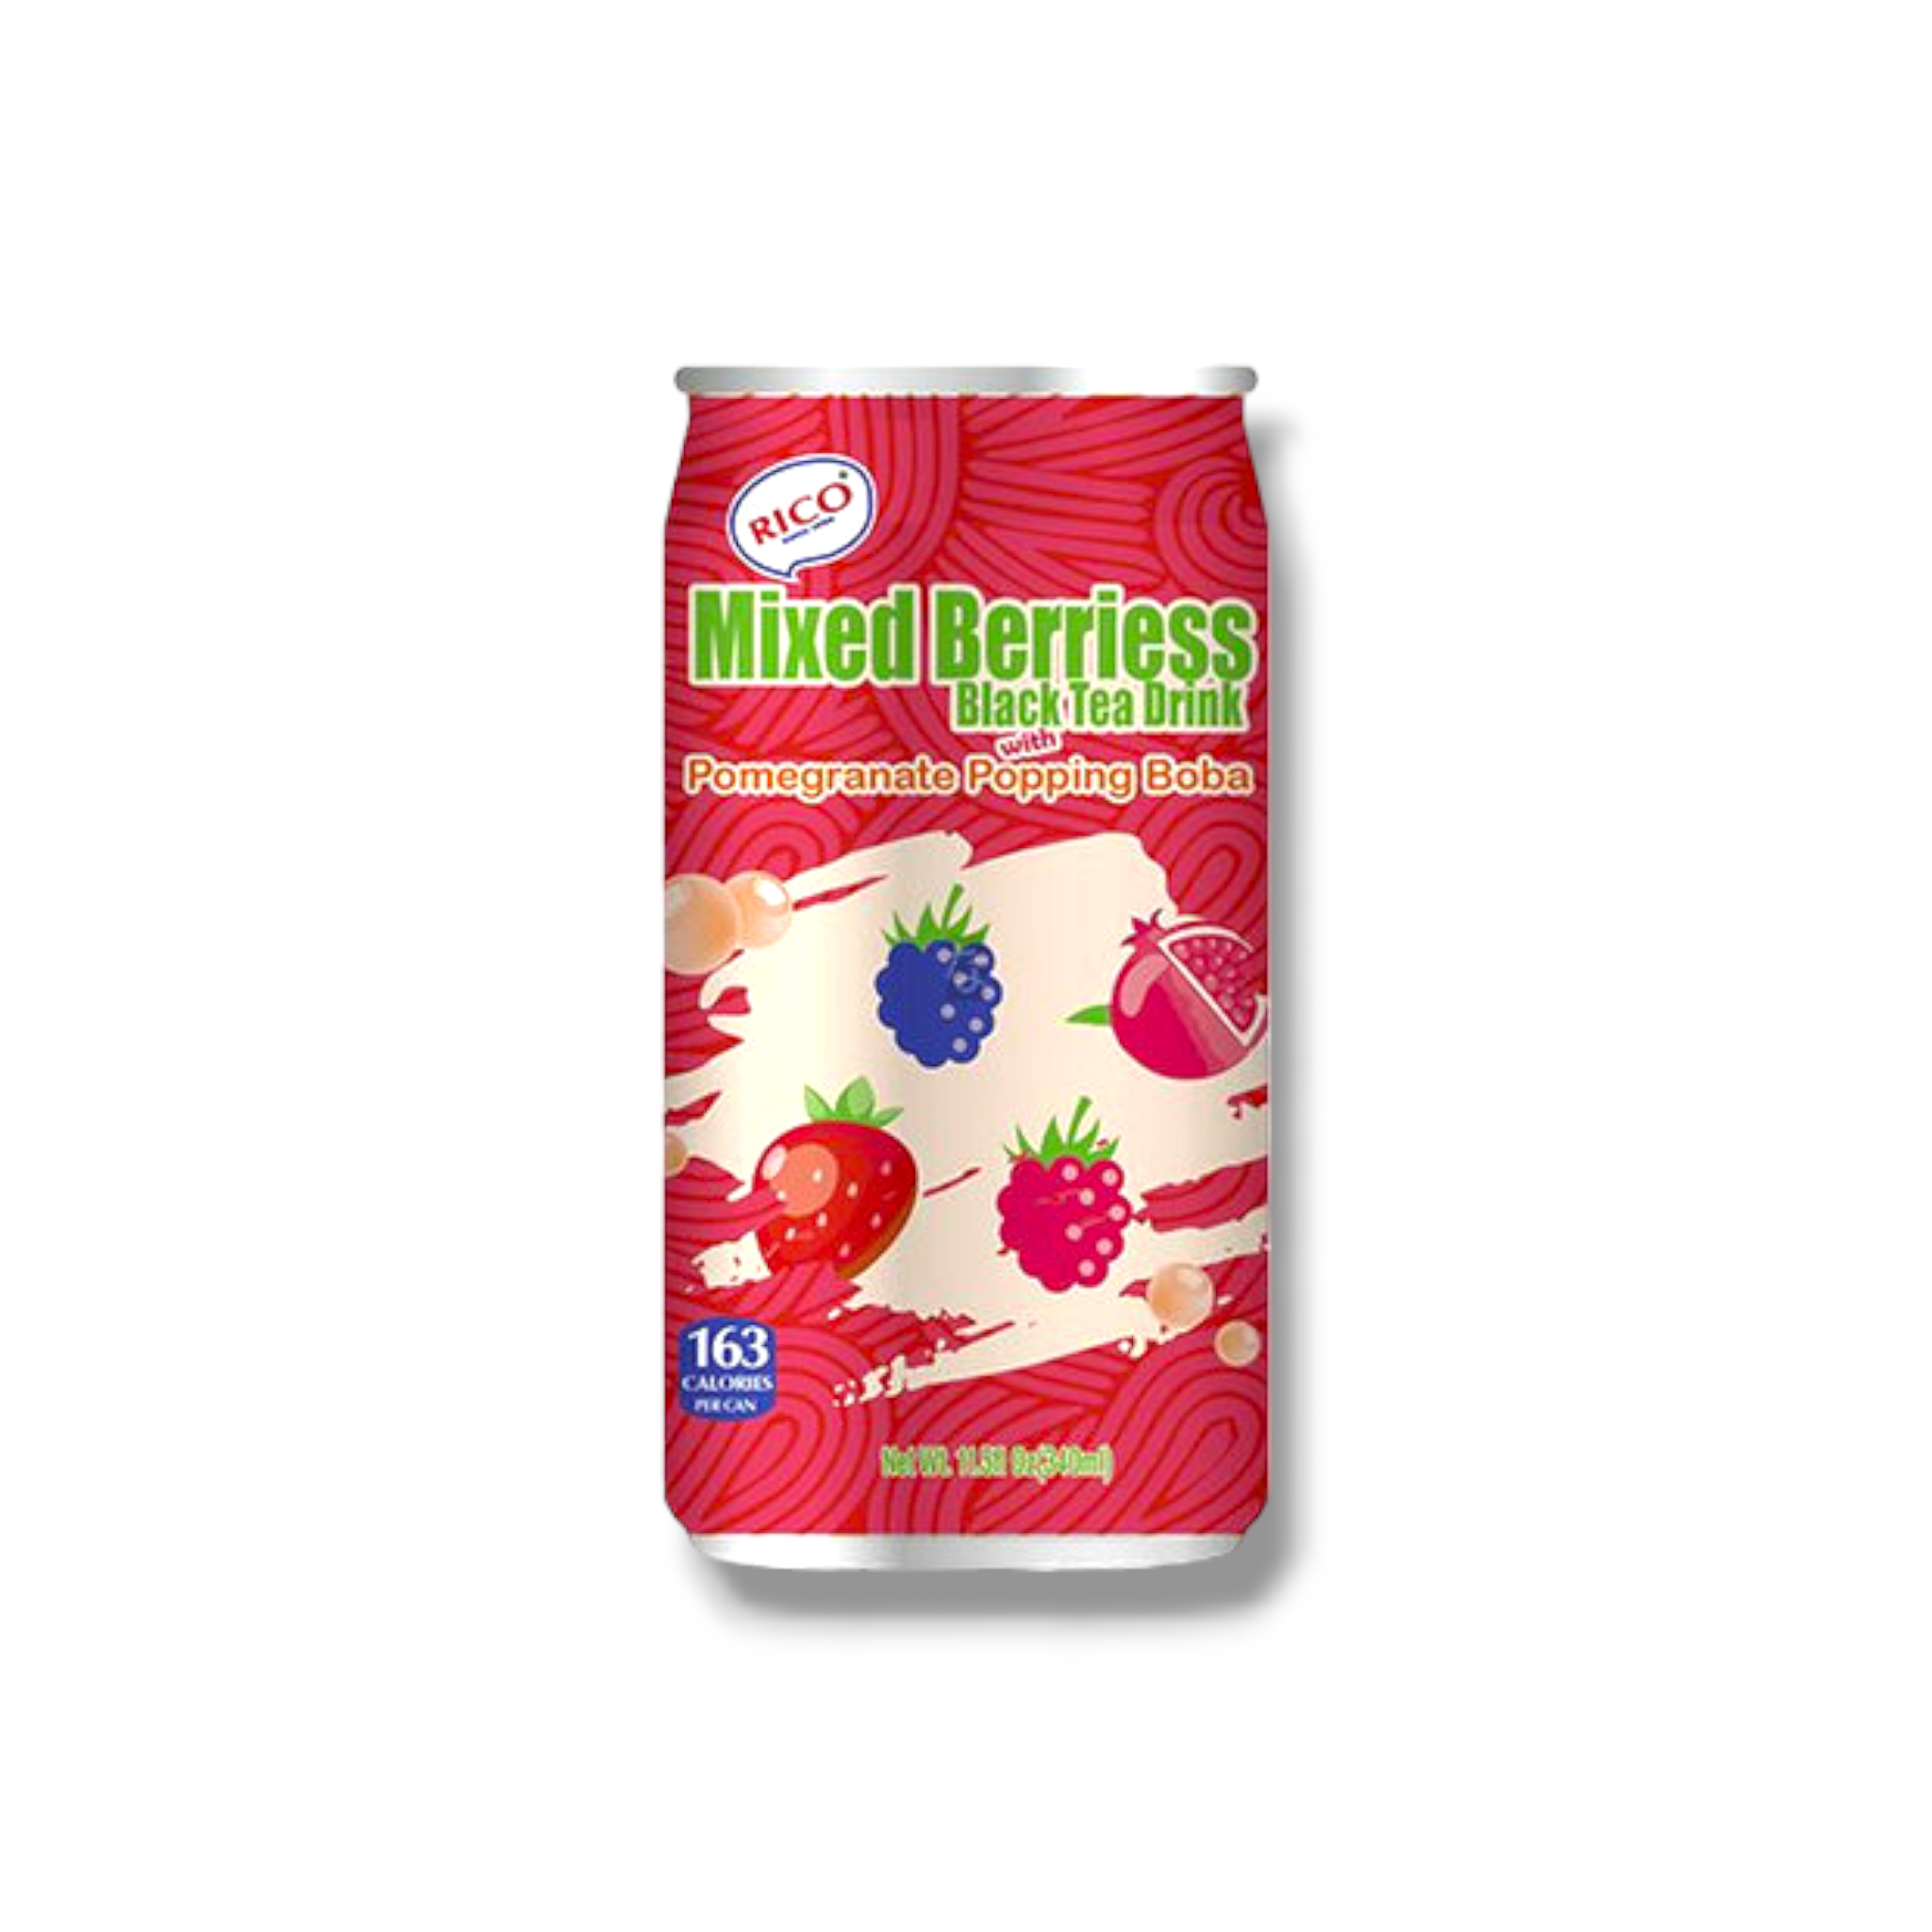 RICO Black Tea Drink Mixed Berries mit Granatapfel Boba 340ml aus Taiwan